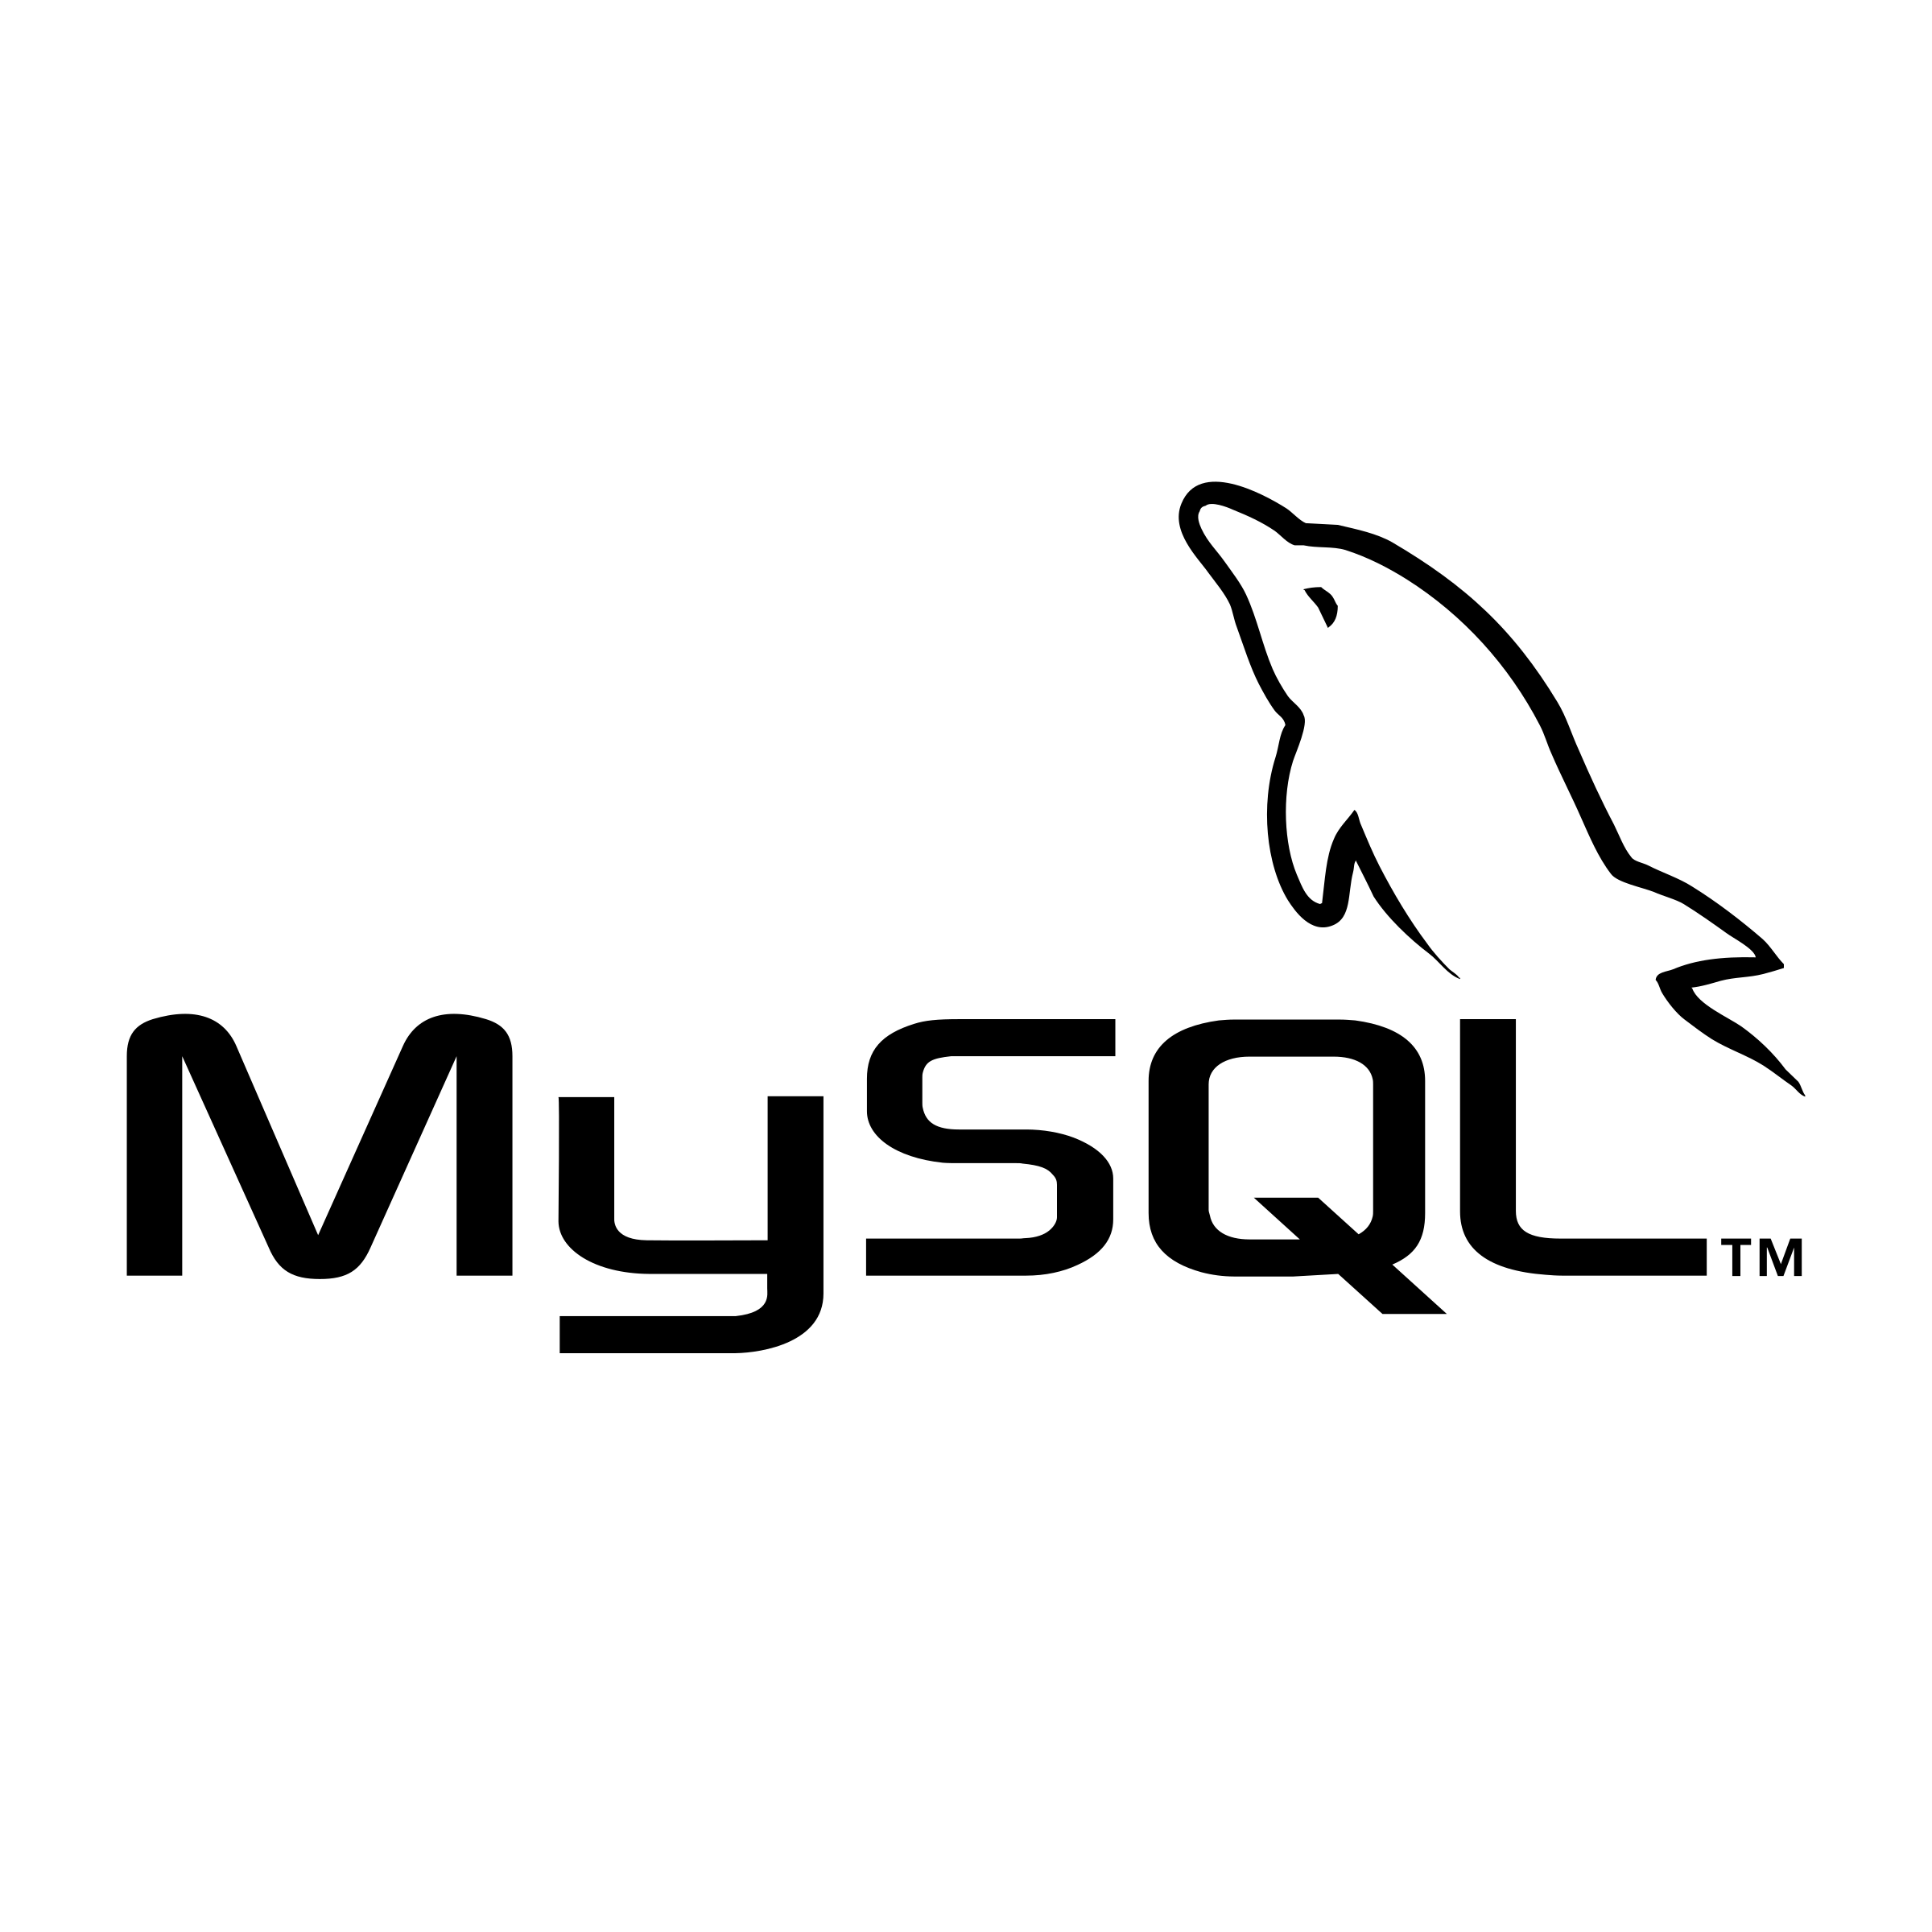 MySQL Logo - MySQL Logo PNG Transparent & SVG Vector